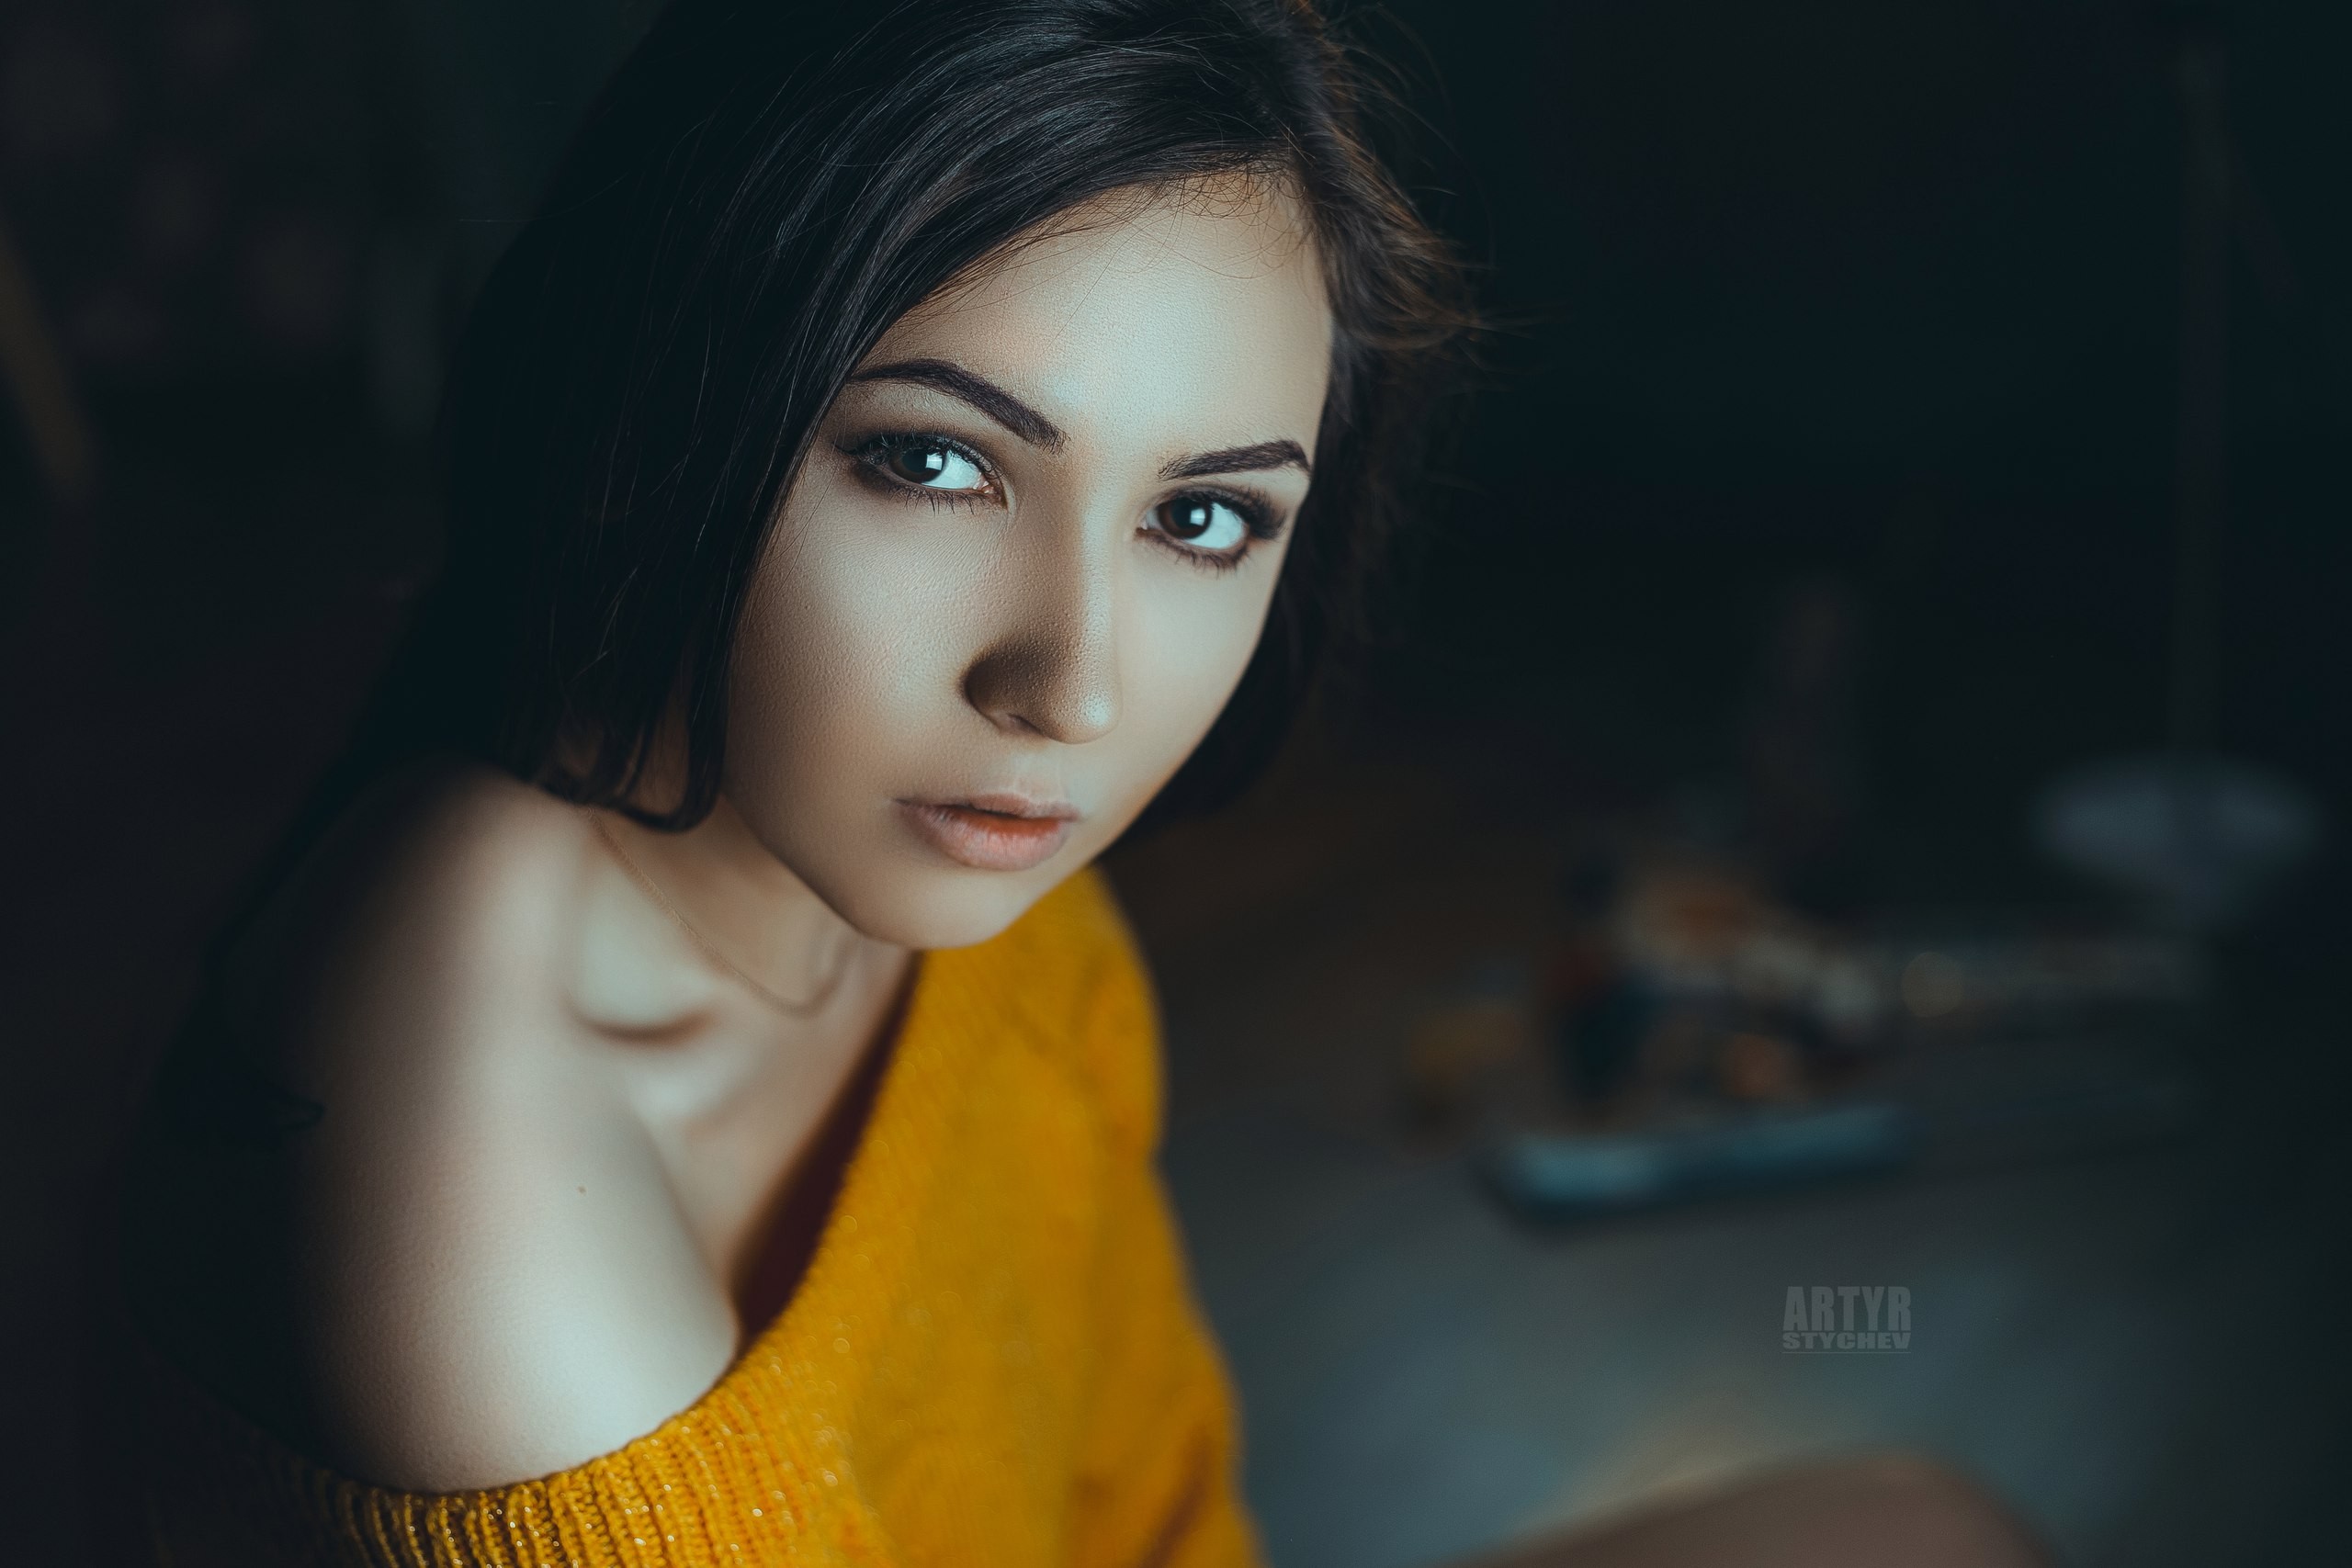 Women Face Portrait Artyr Stychev Yellow Sweater Black Hair 2560x1707